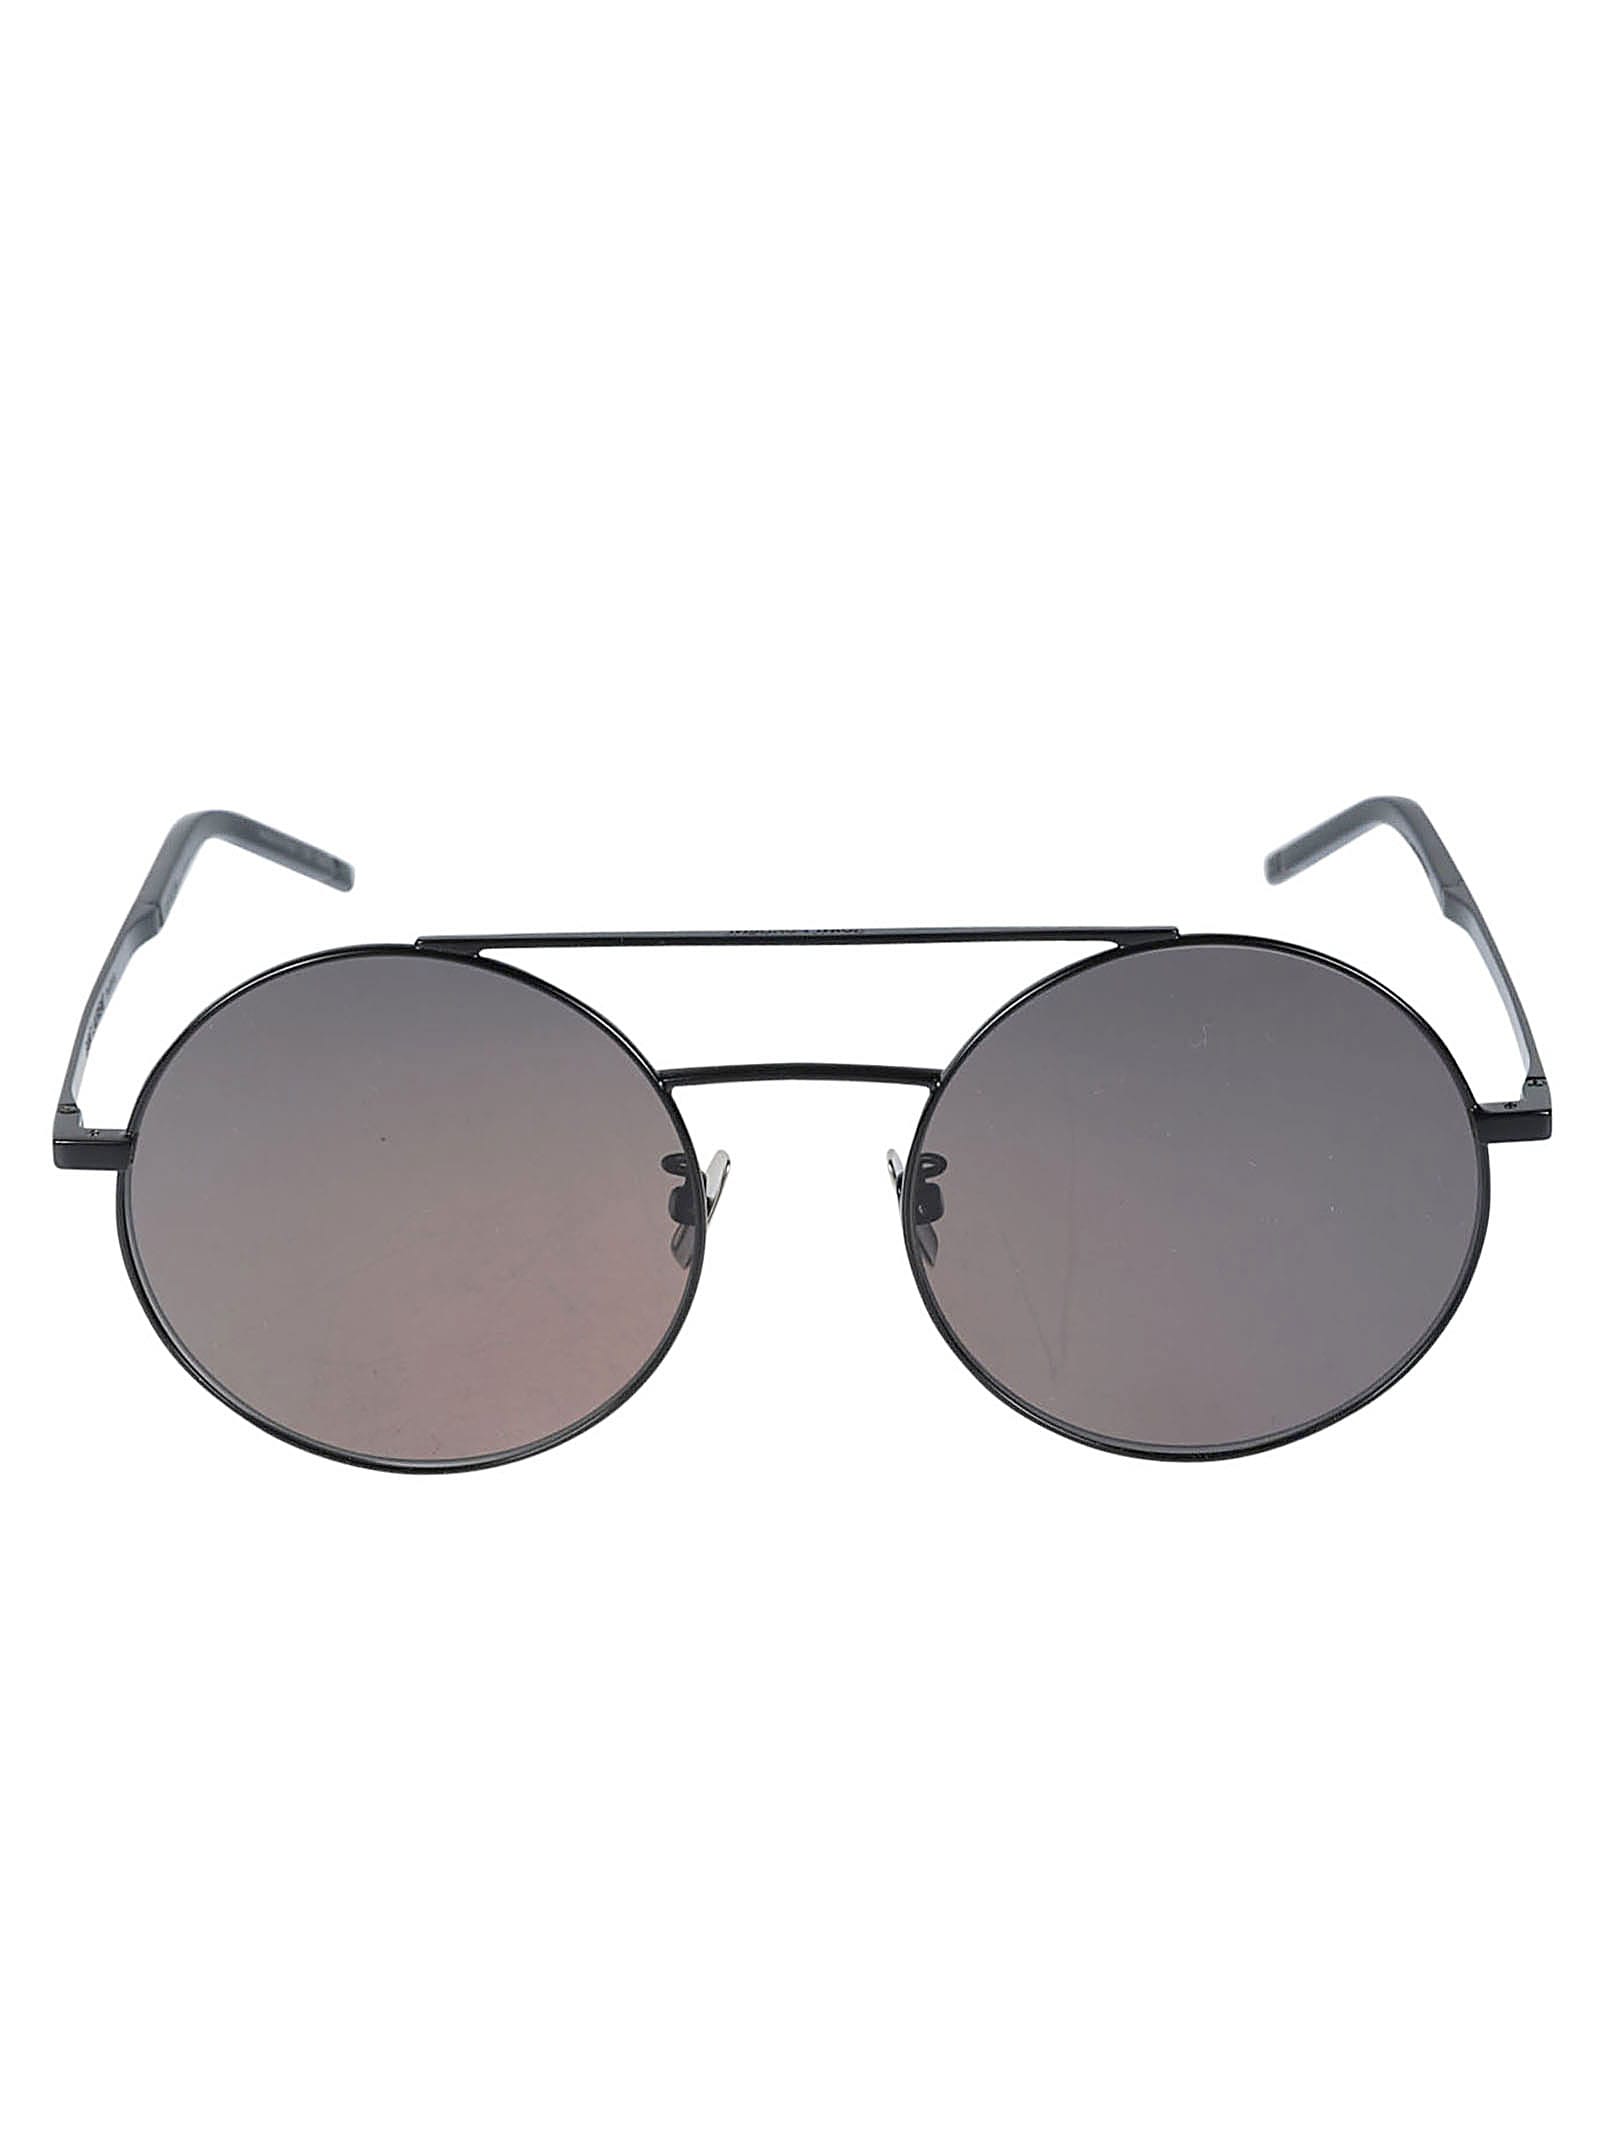 Saint Laurent Eyewear Round Sunglasses